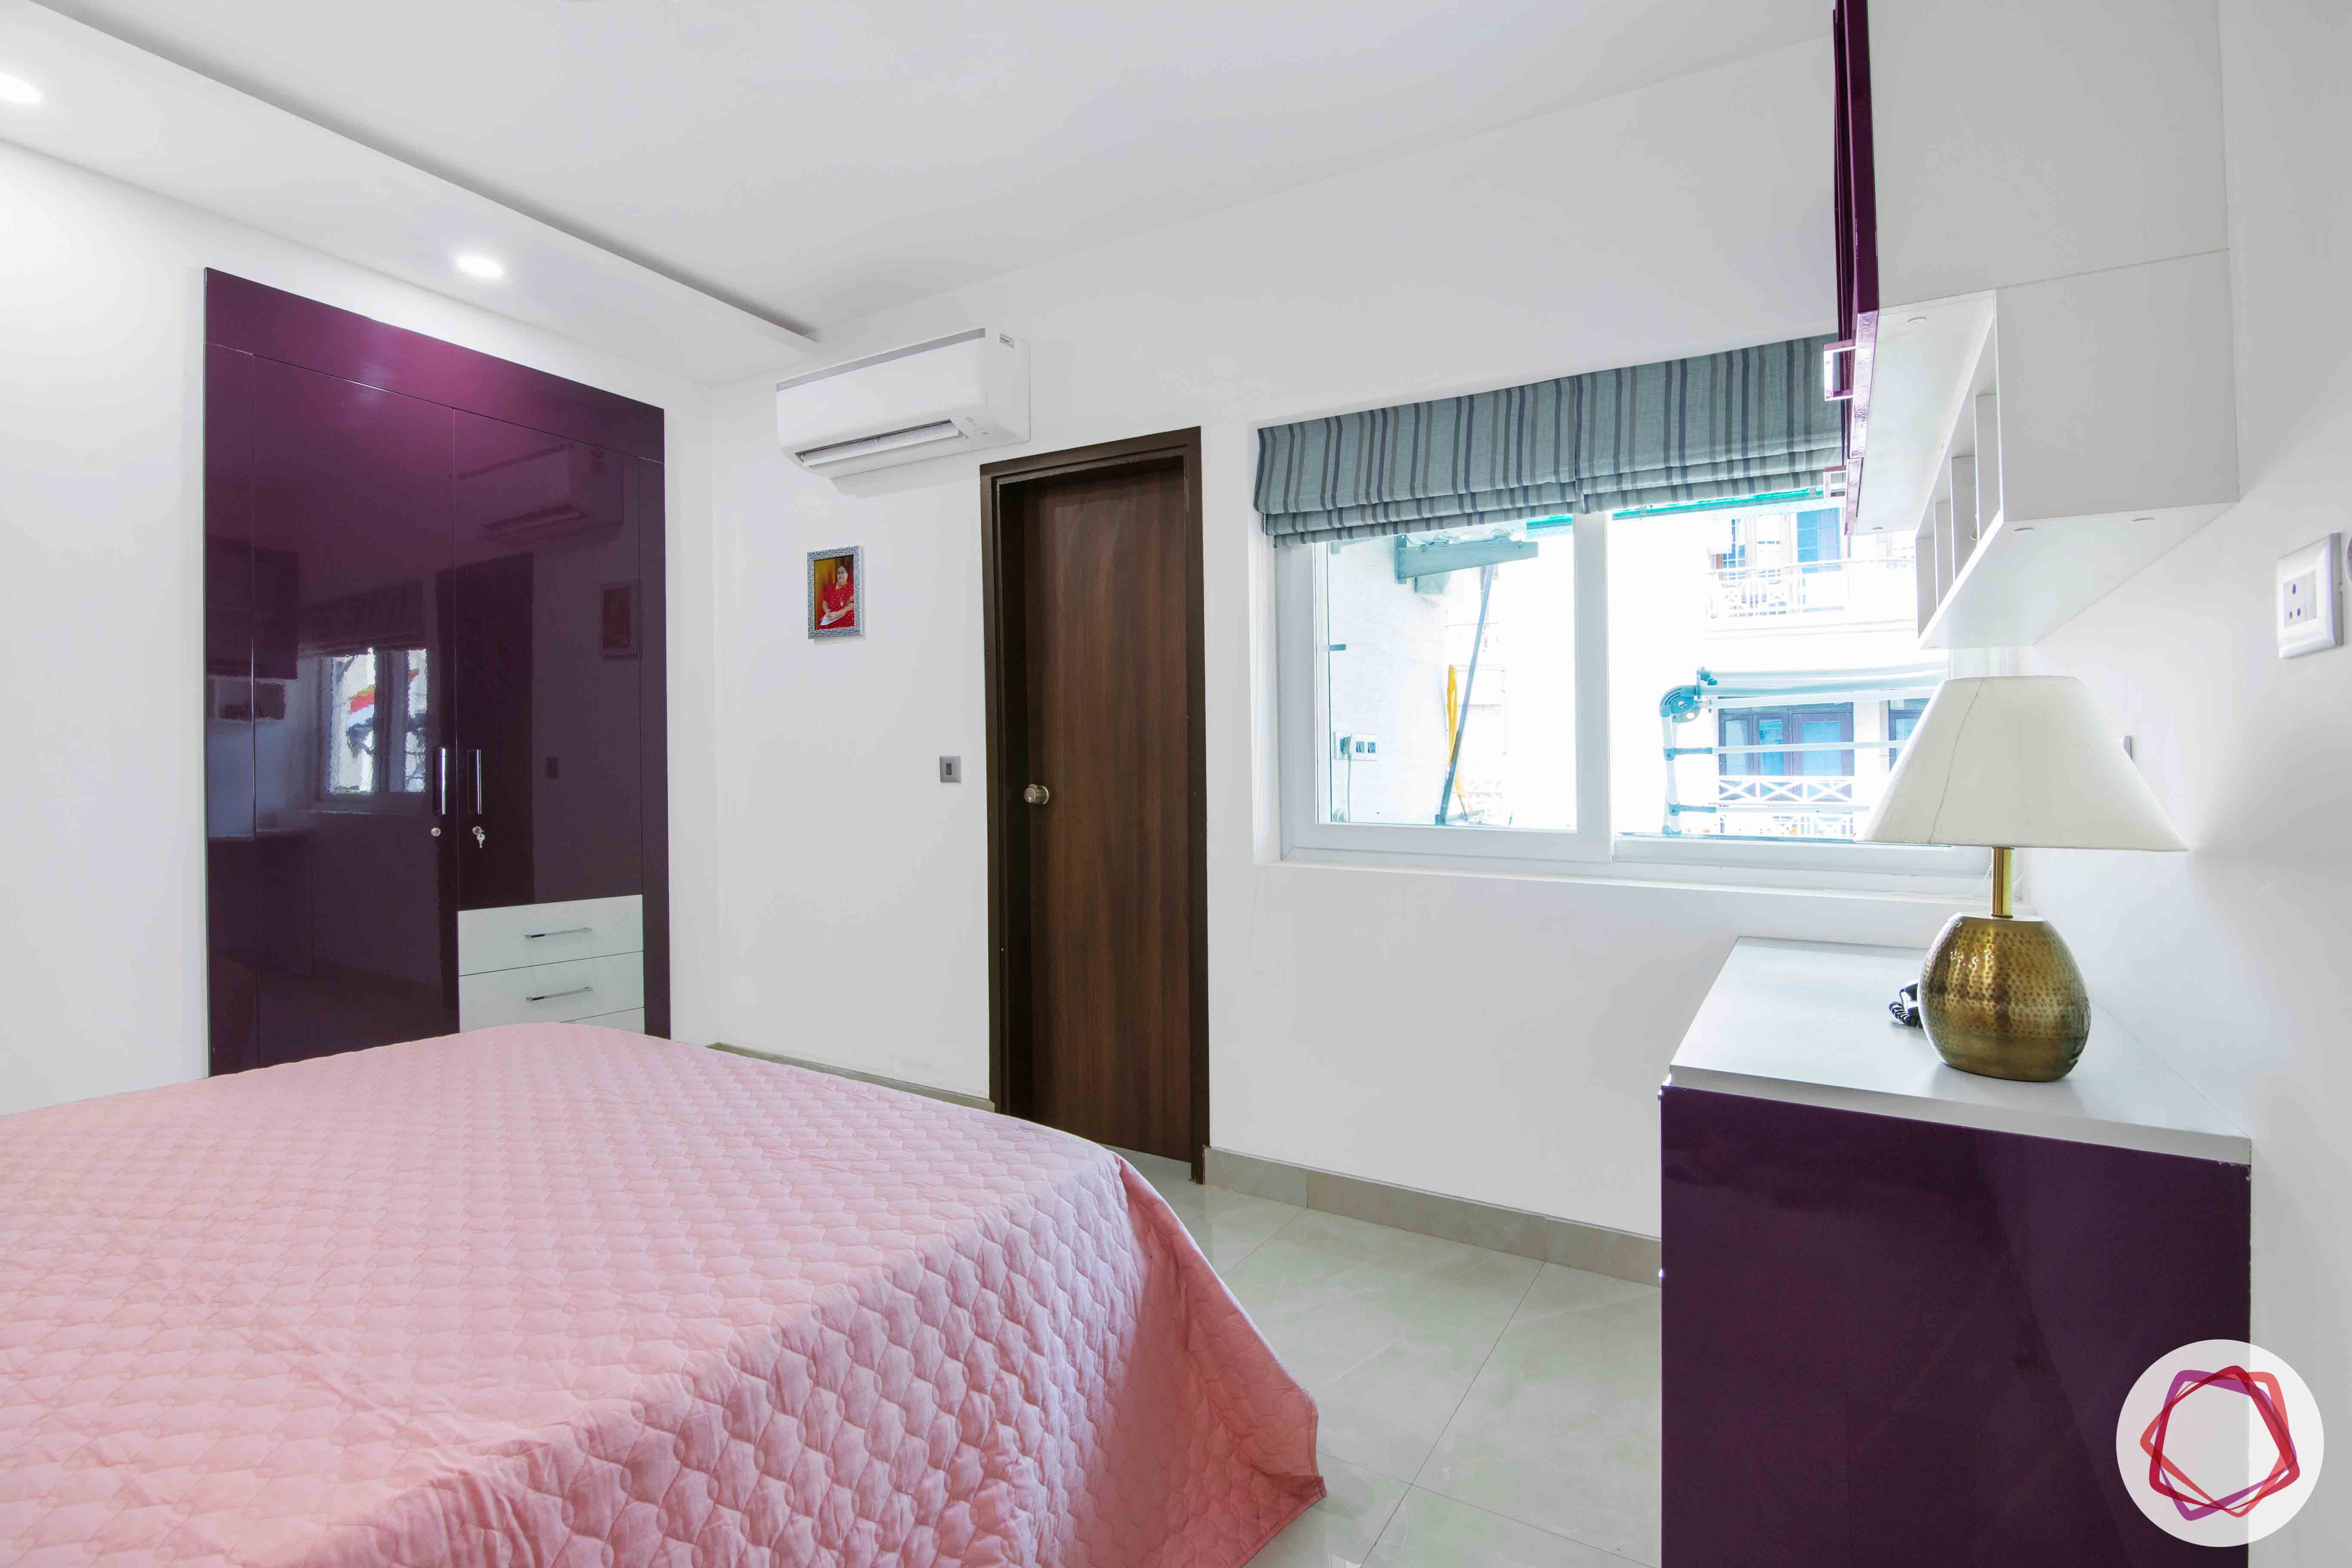 parents-bedroom-purple-study-drawers-bed-shelves-floral-wallpaper-wardrobe